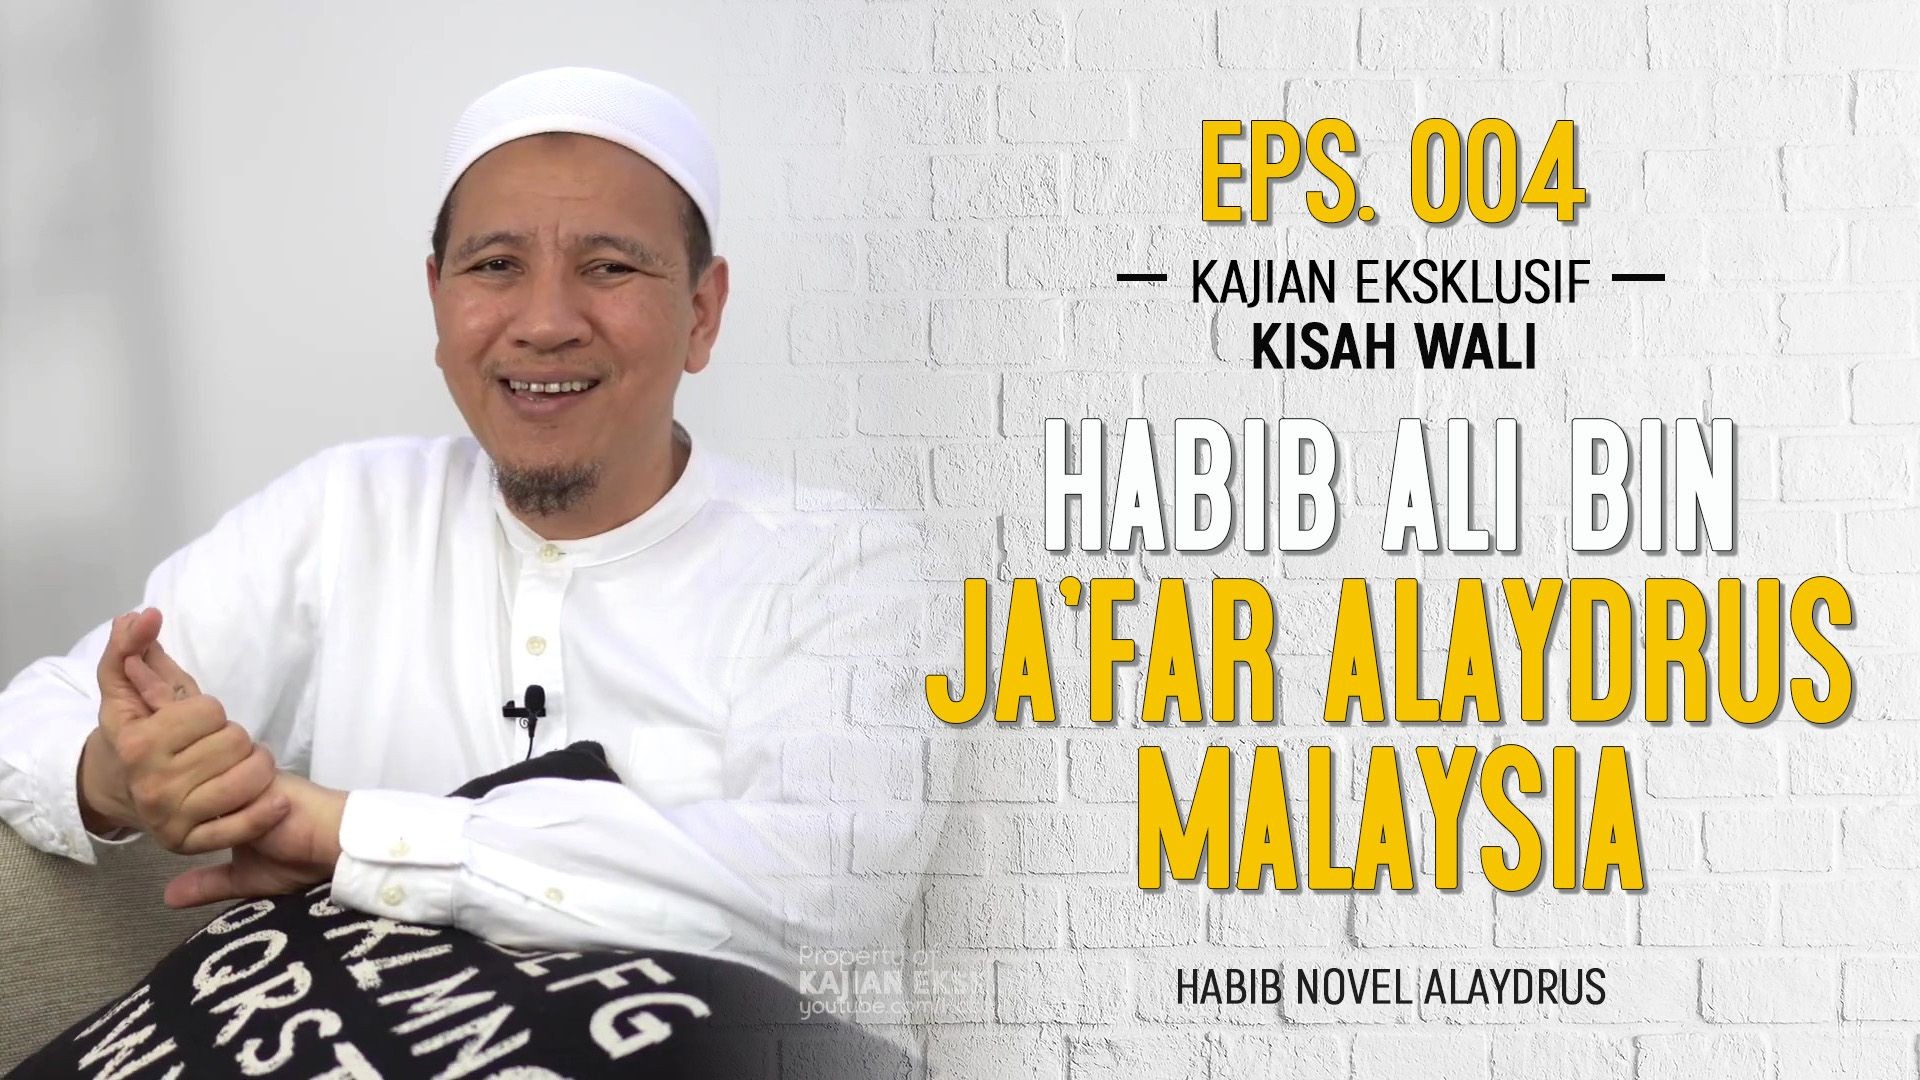 ⁣HABIB ALI BIN JA'FAR ALAYDRUS MALAYSIA